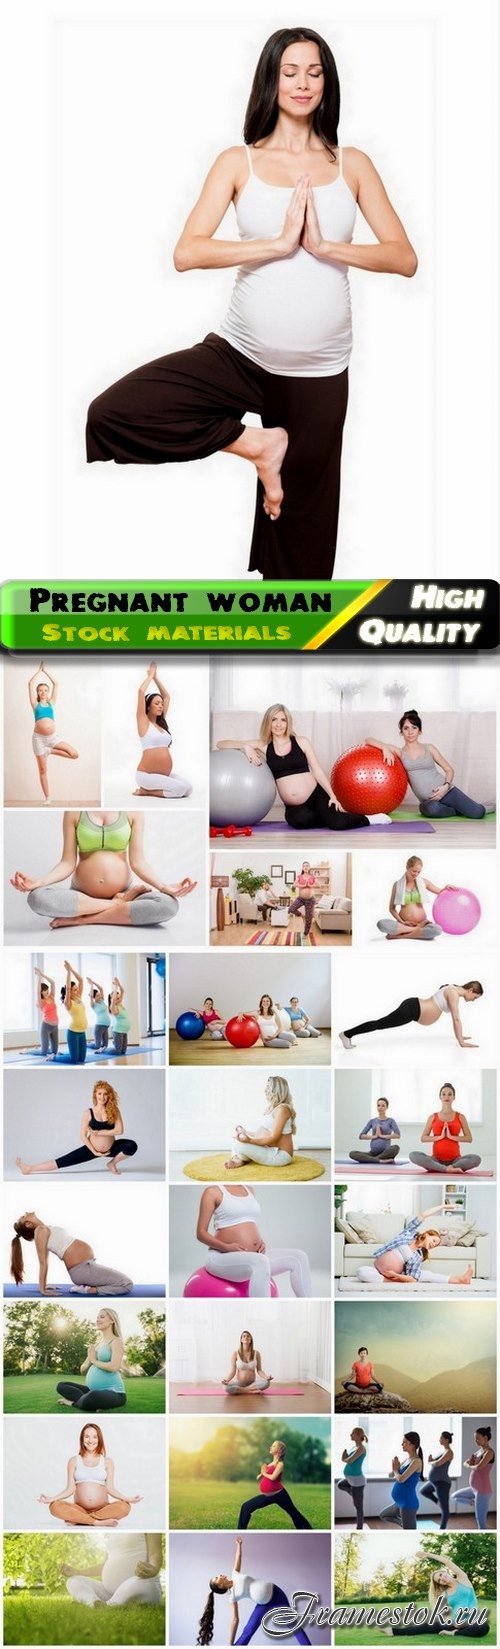 Sporting pregnant woman and girl make yoga - 25 HQ Jpg